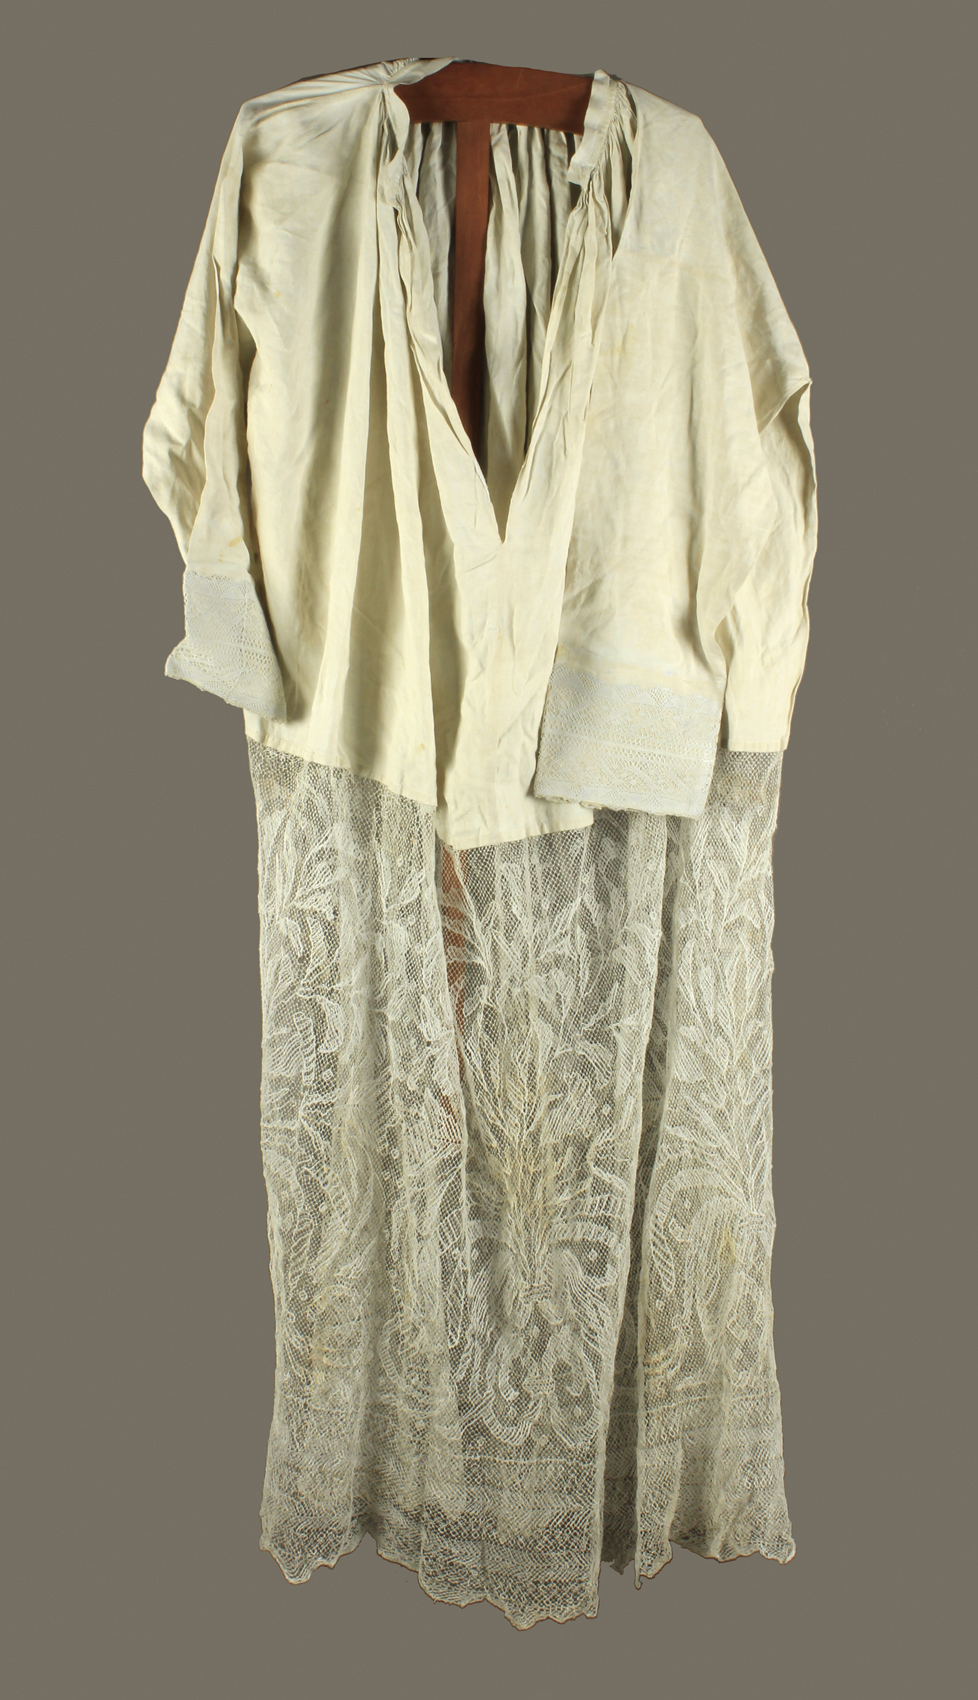 A 19th century linen and lace Catholic surplice vestment